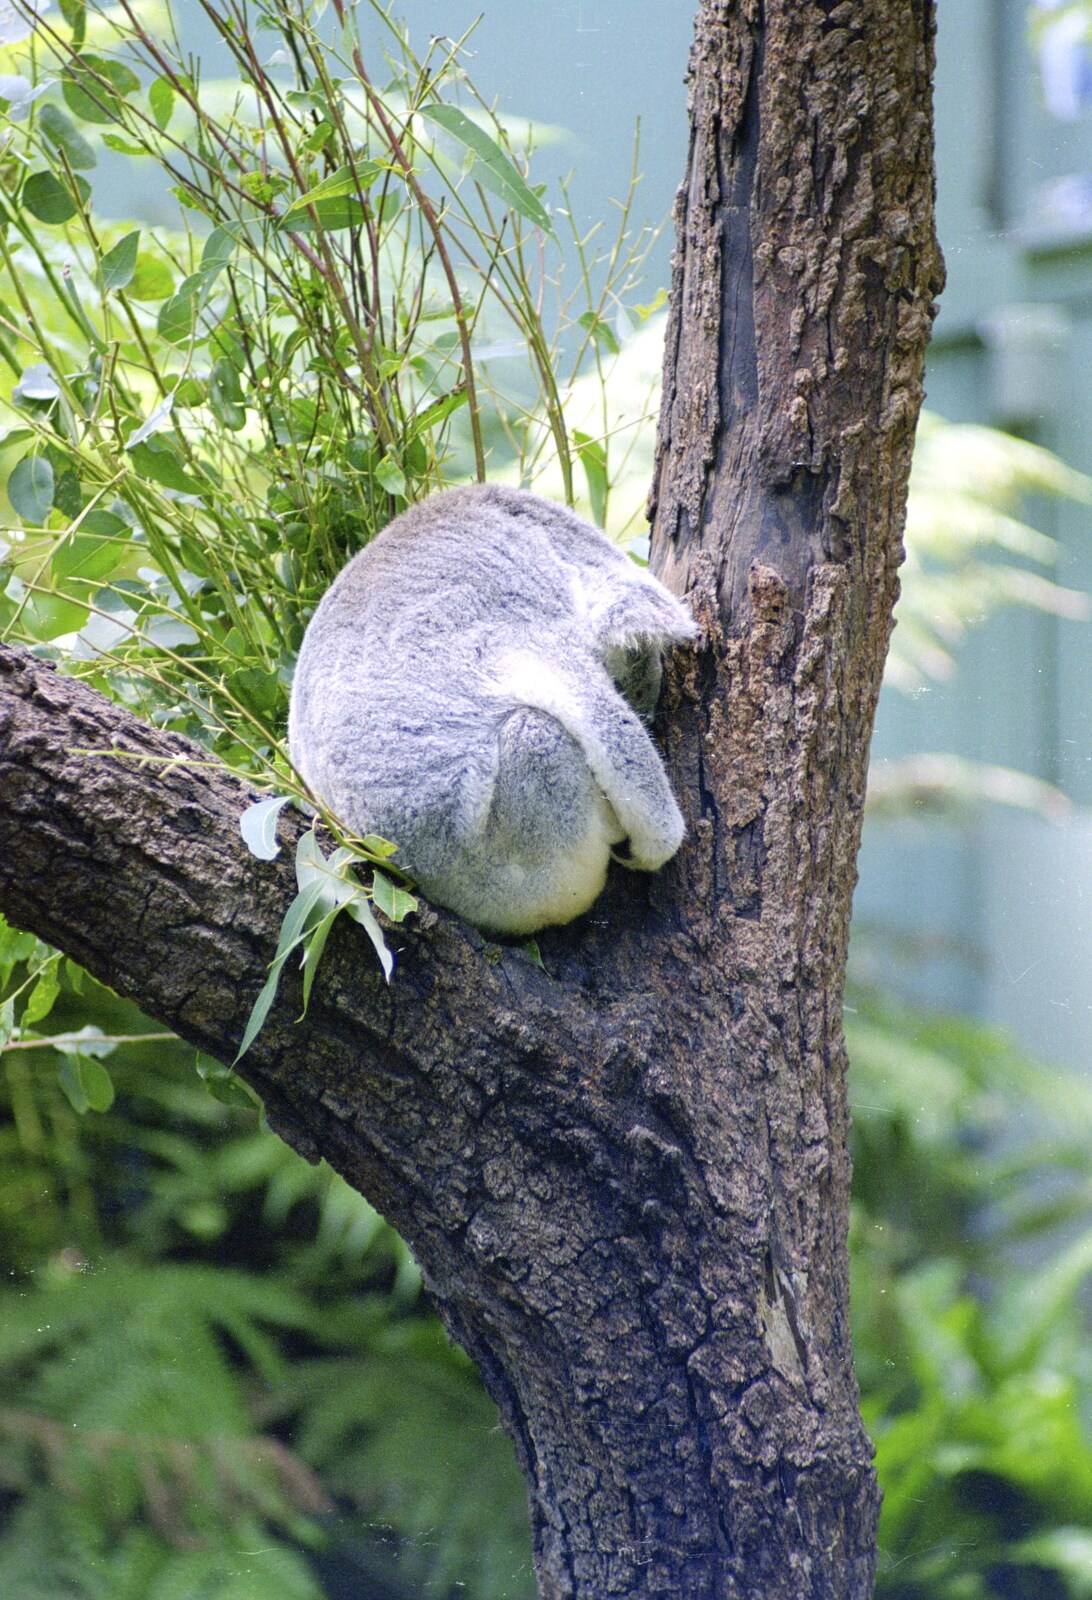 A koala's asleep in a tree from Sydney Triathlon, Sydney, Australia - 16th April 2000